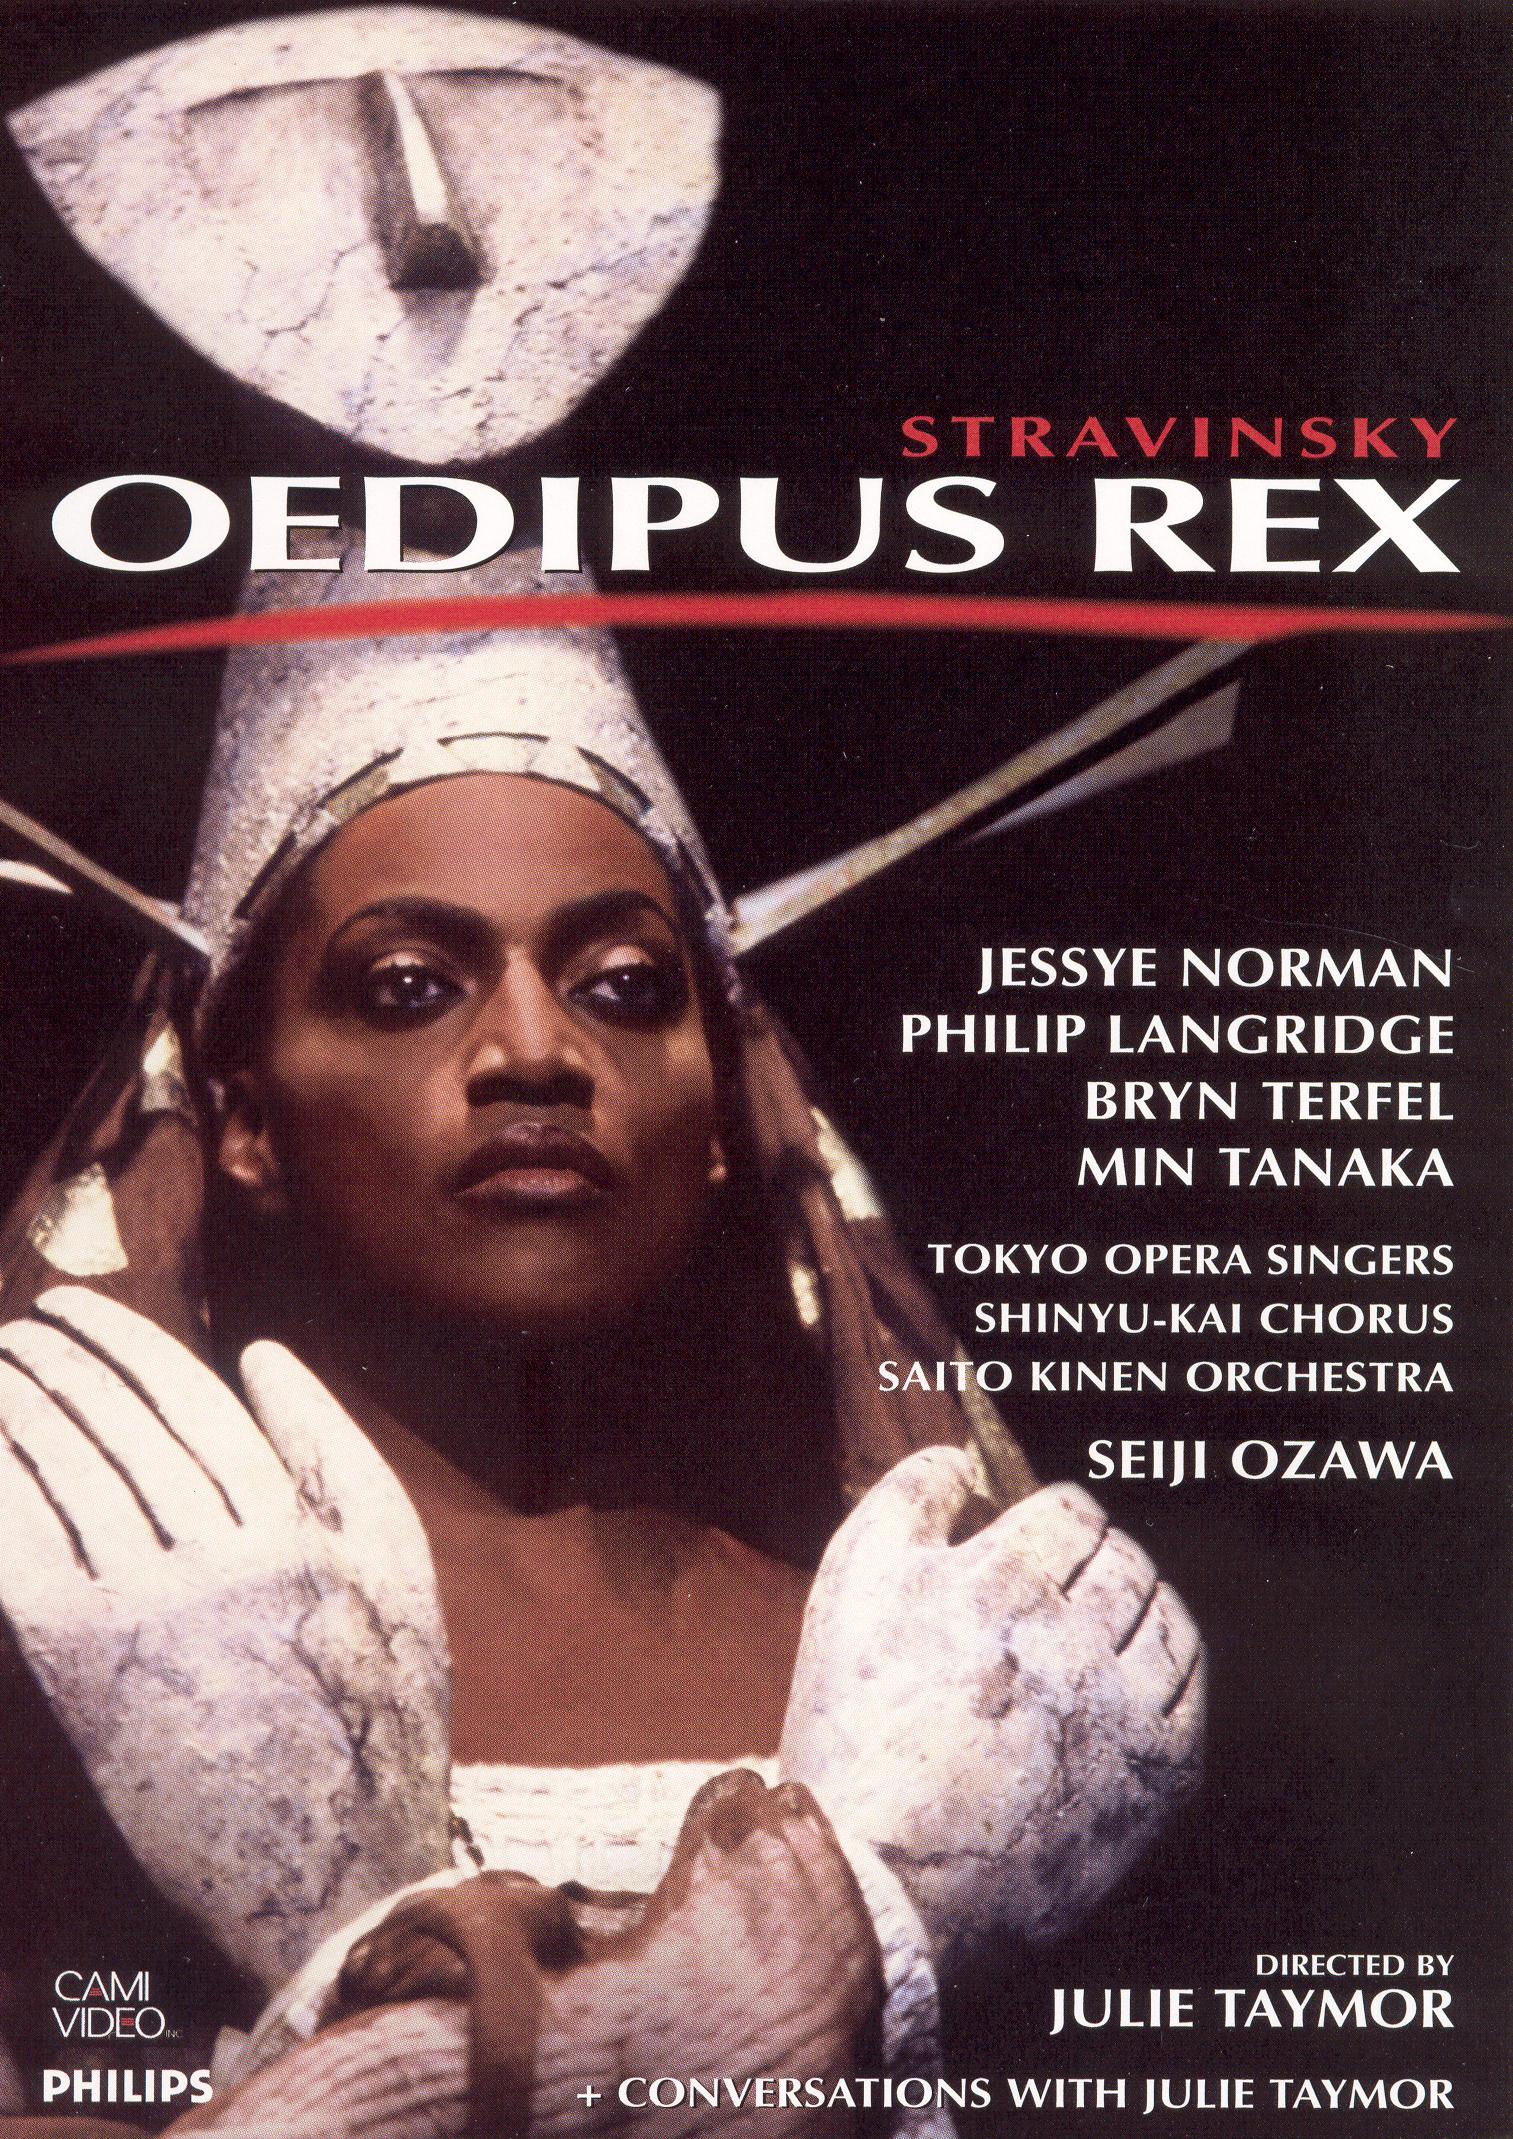 Oedipus Rex 1993 Julie Taymor Synopsis Characteristics Moods